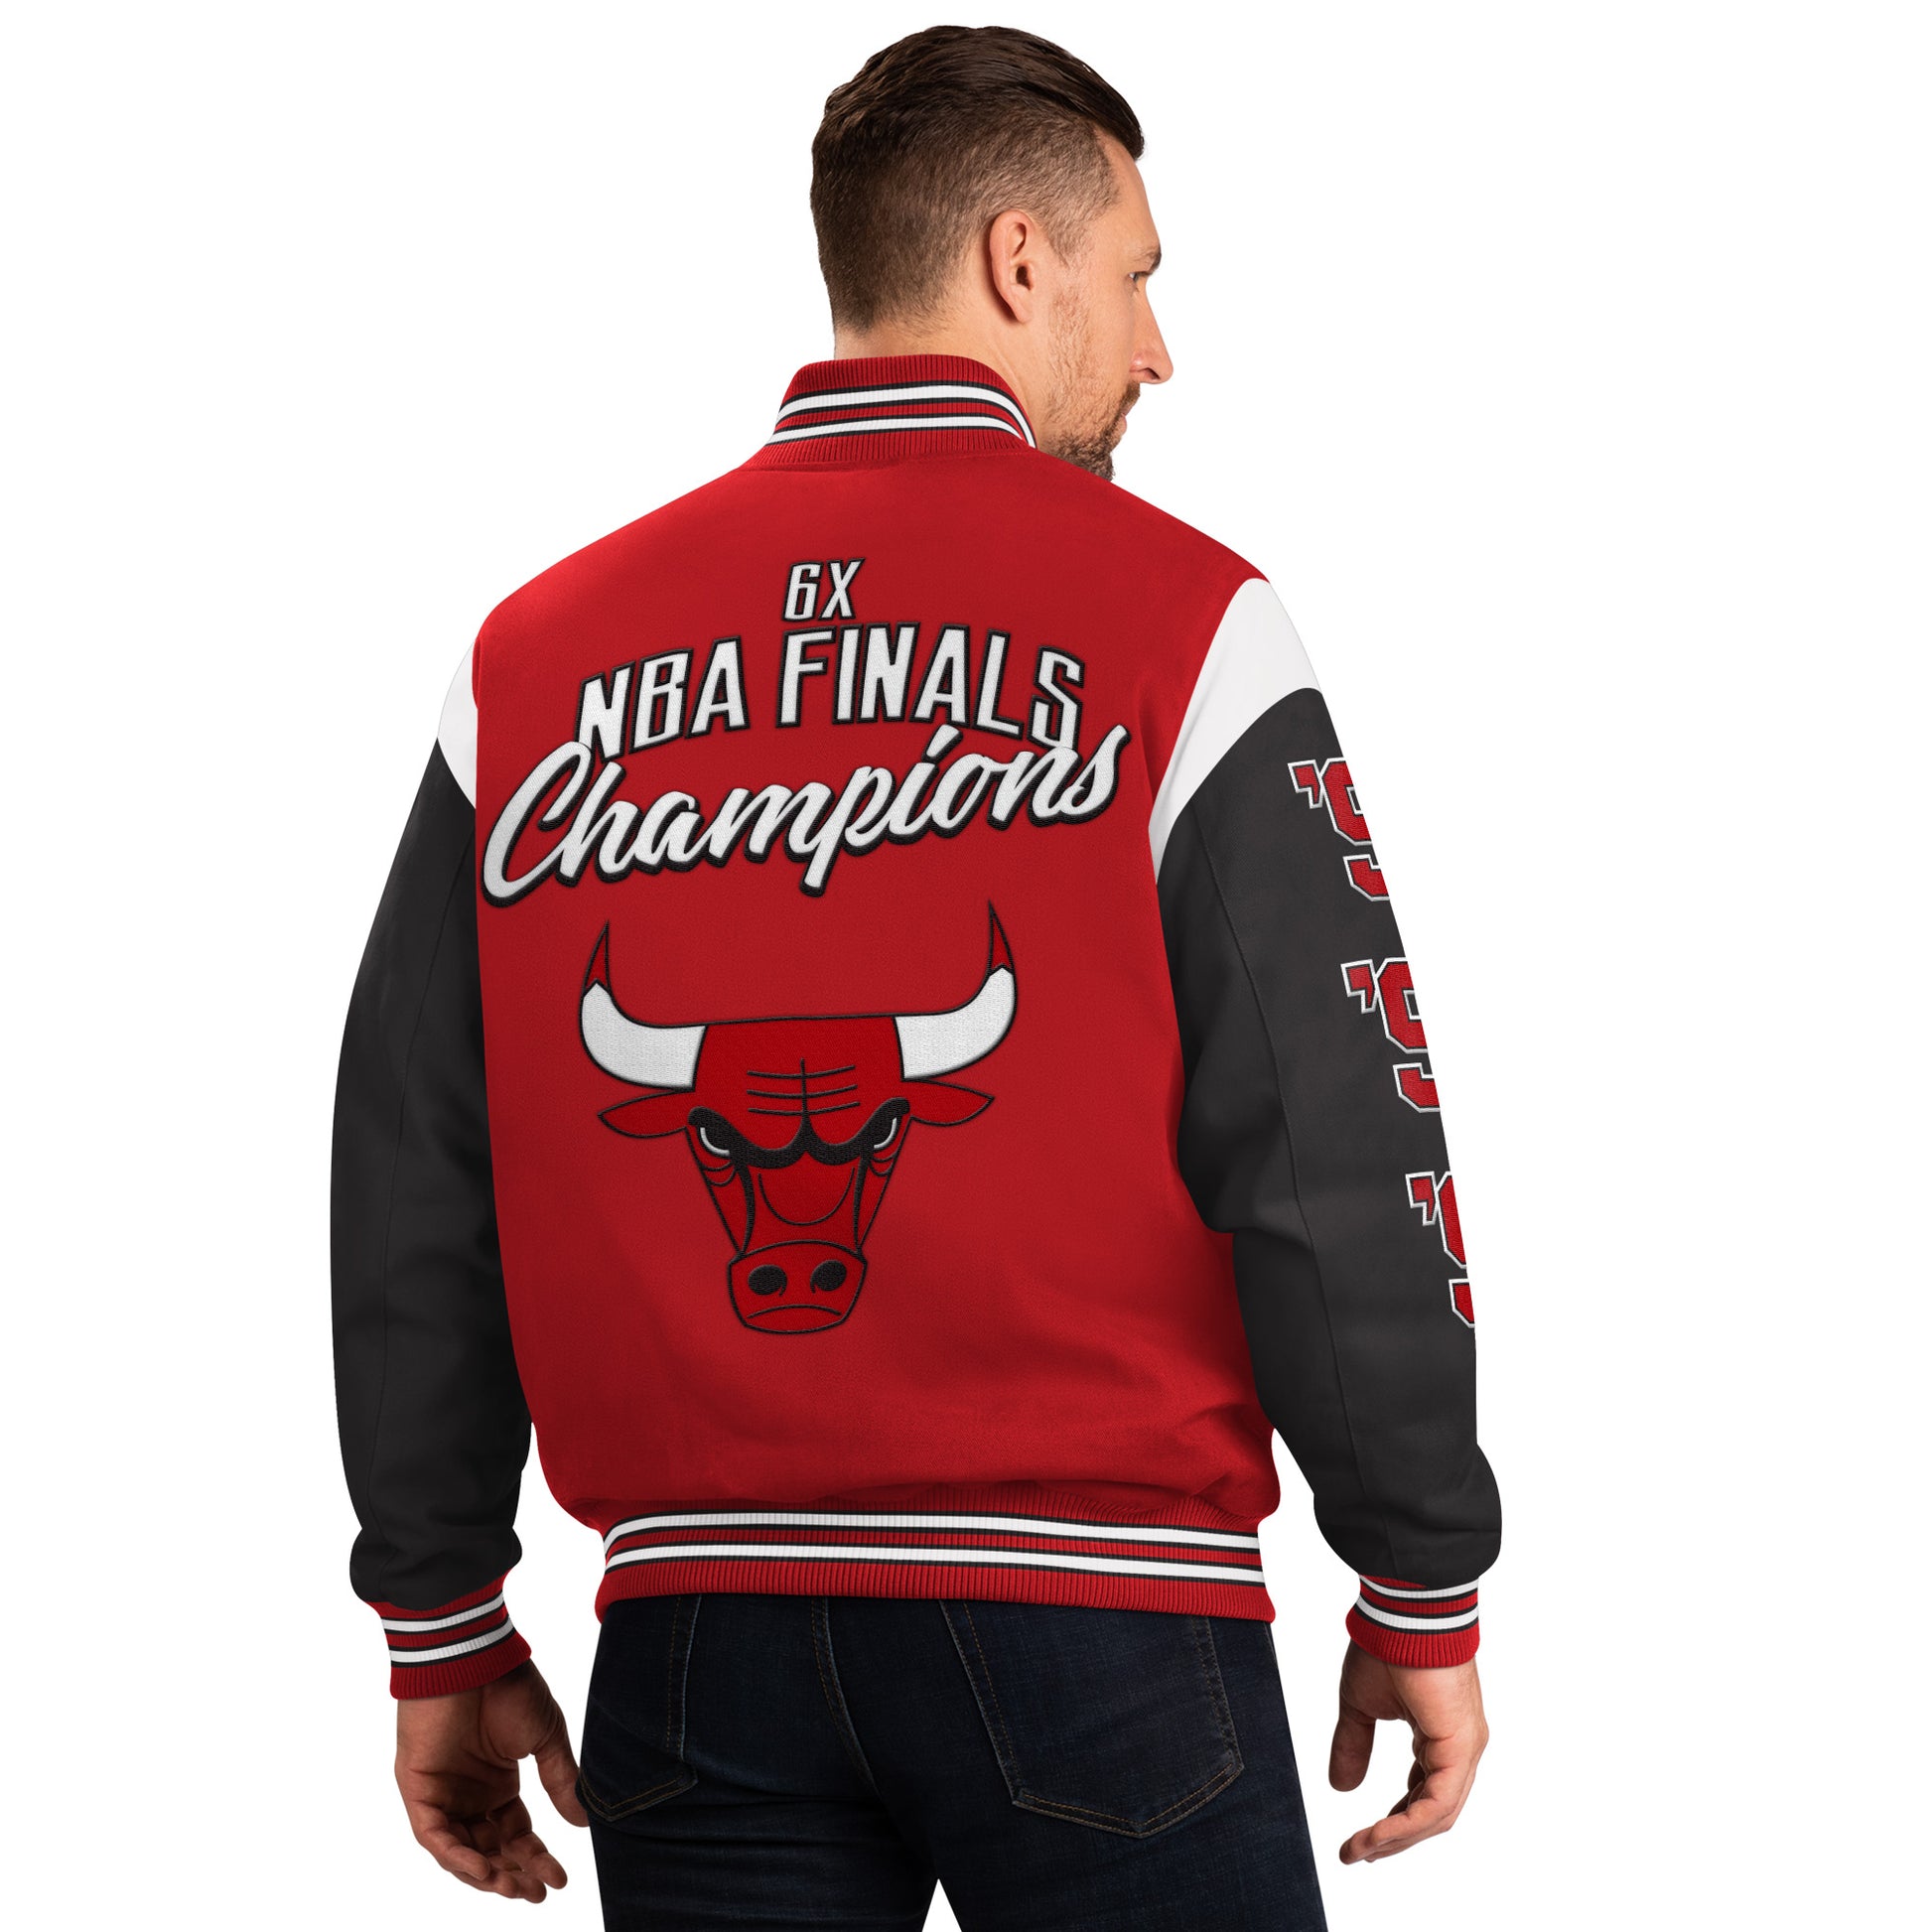 Shop Chicago Bulls Varsity Jacket online